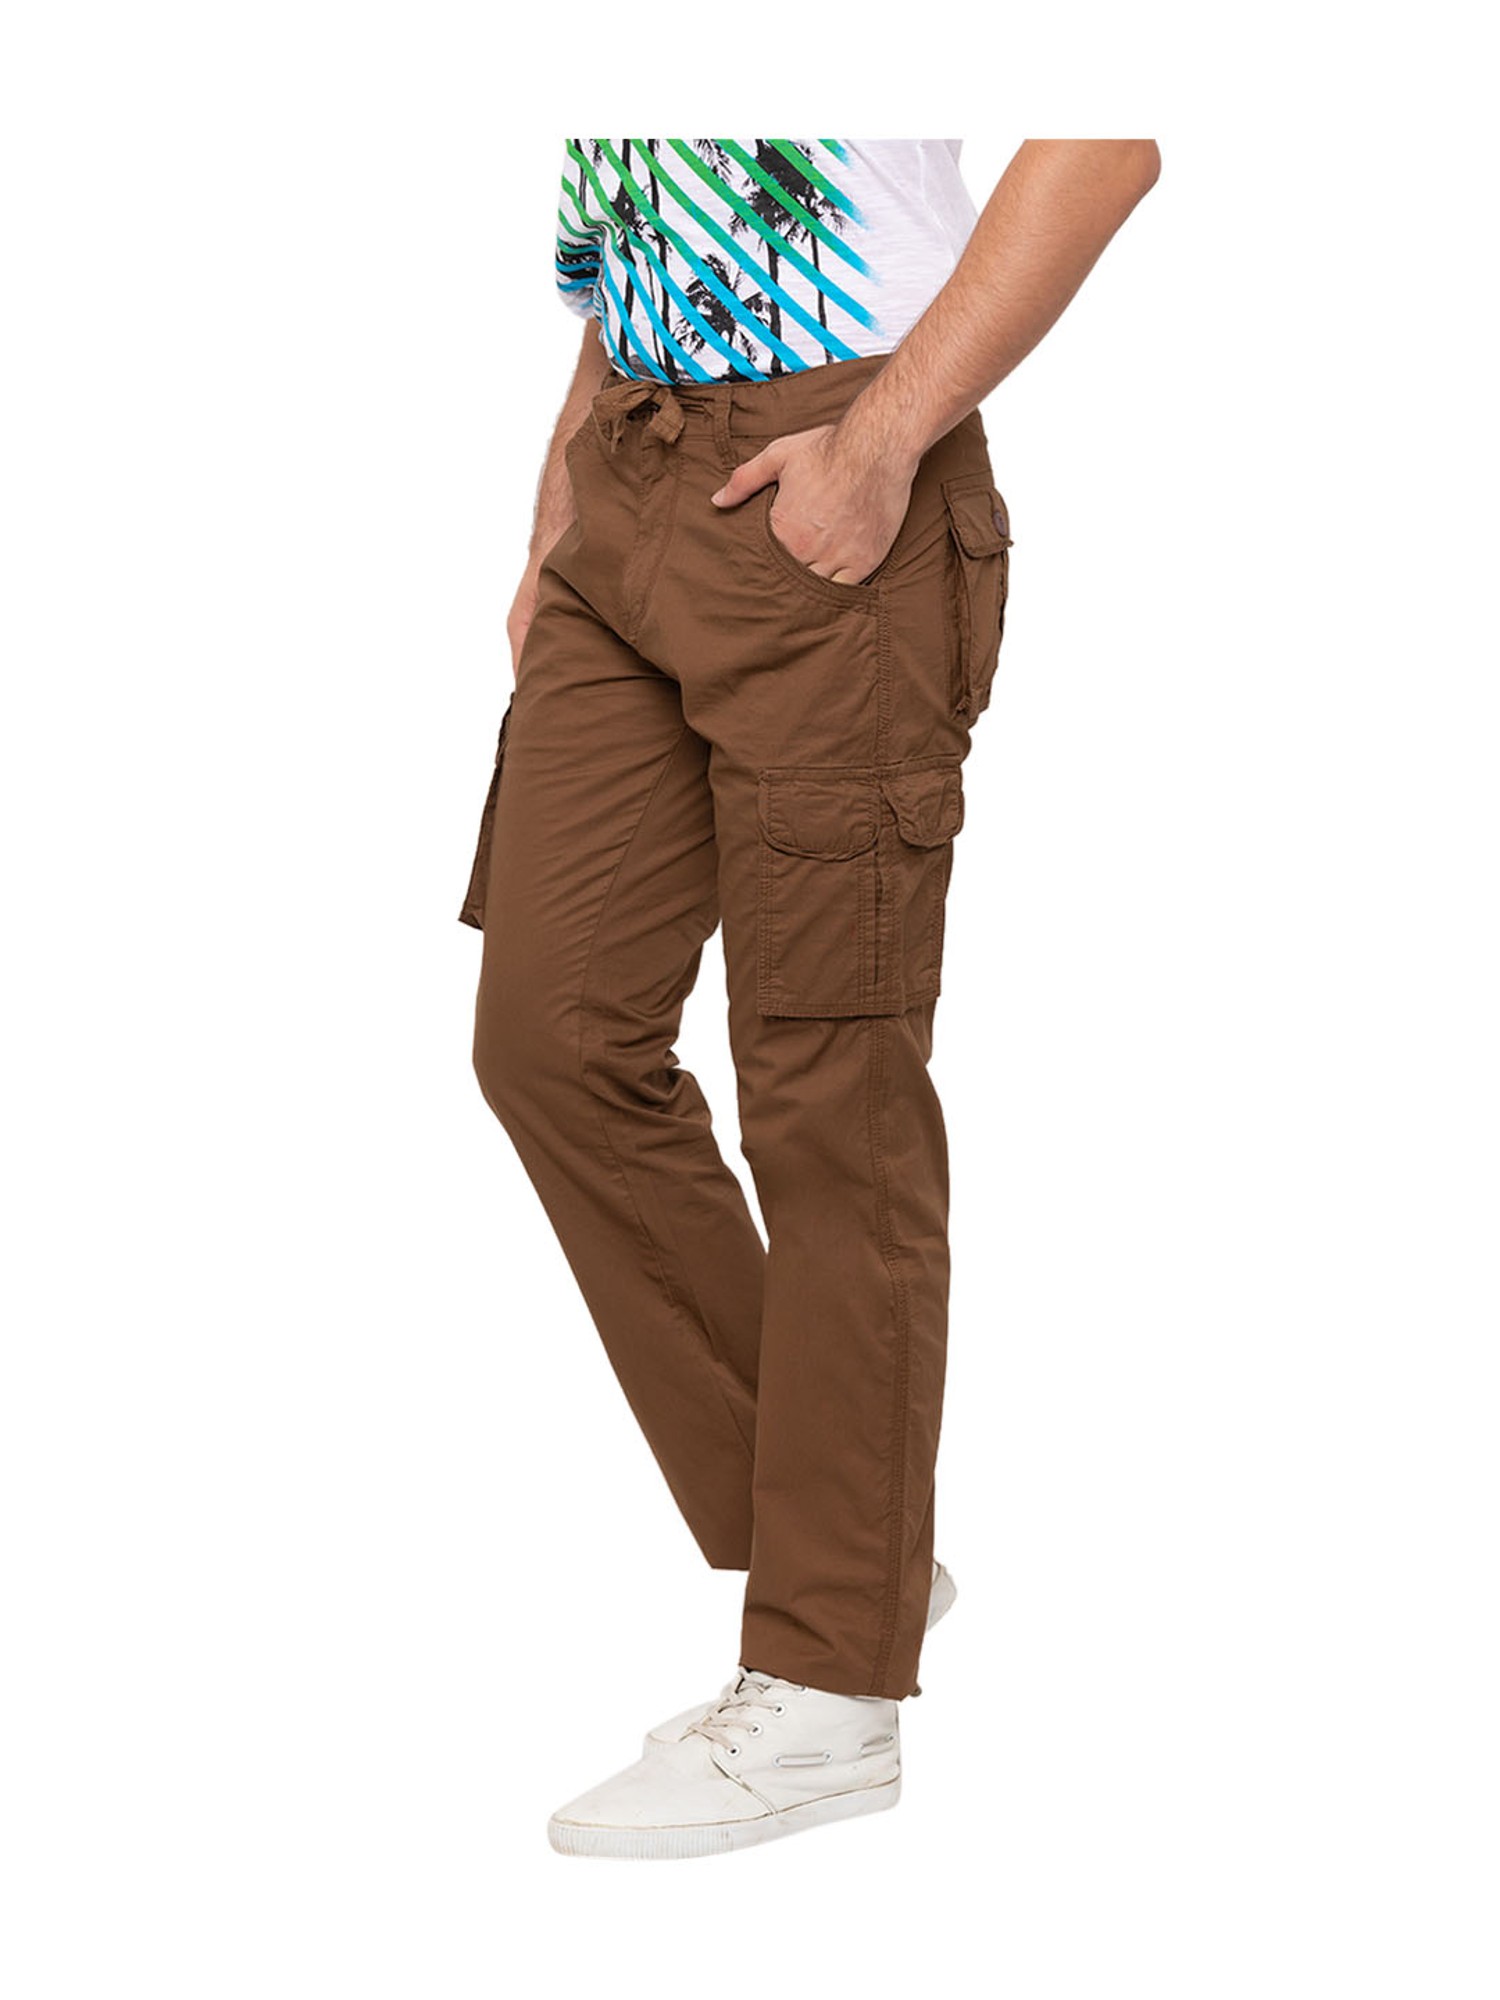 Buy Tan Brown Trousers  Pants for Men by Buda Jeans Co Online  Ajiocom